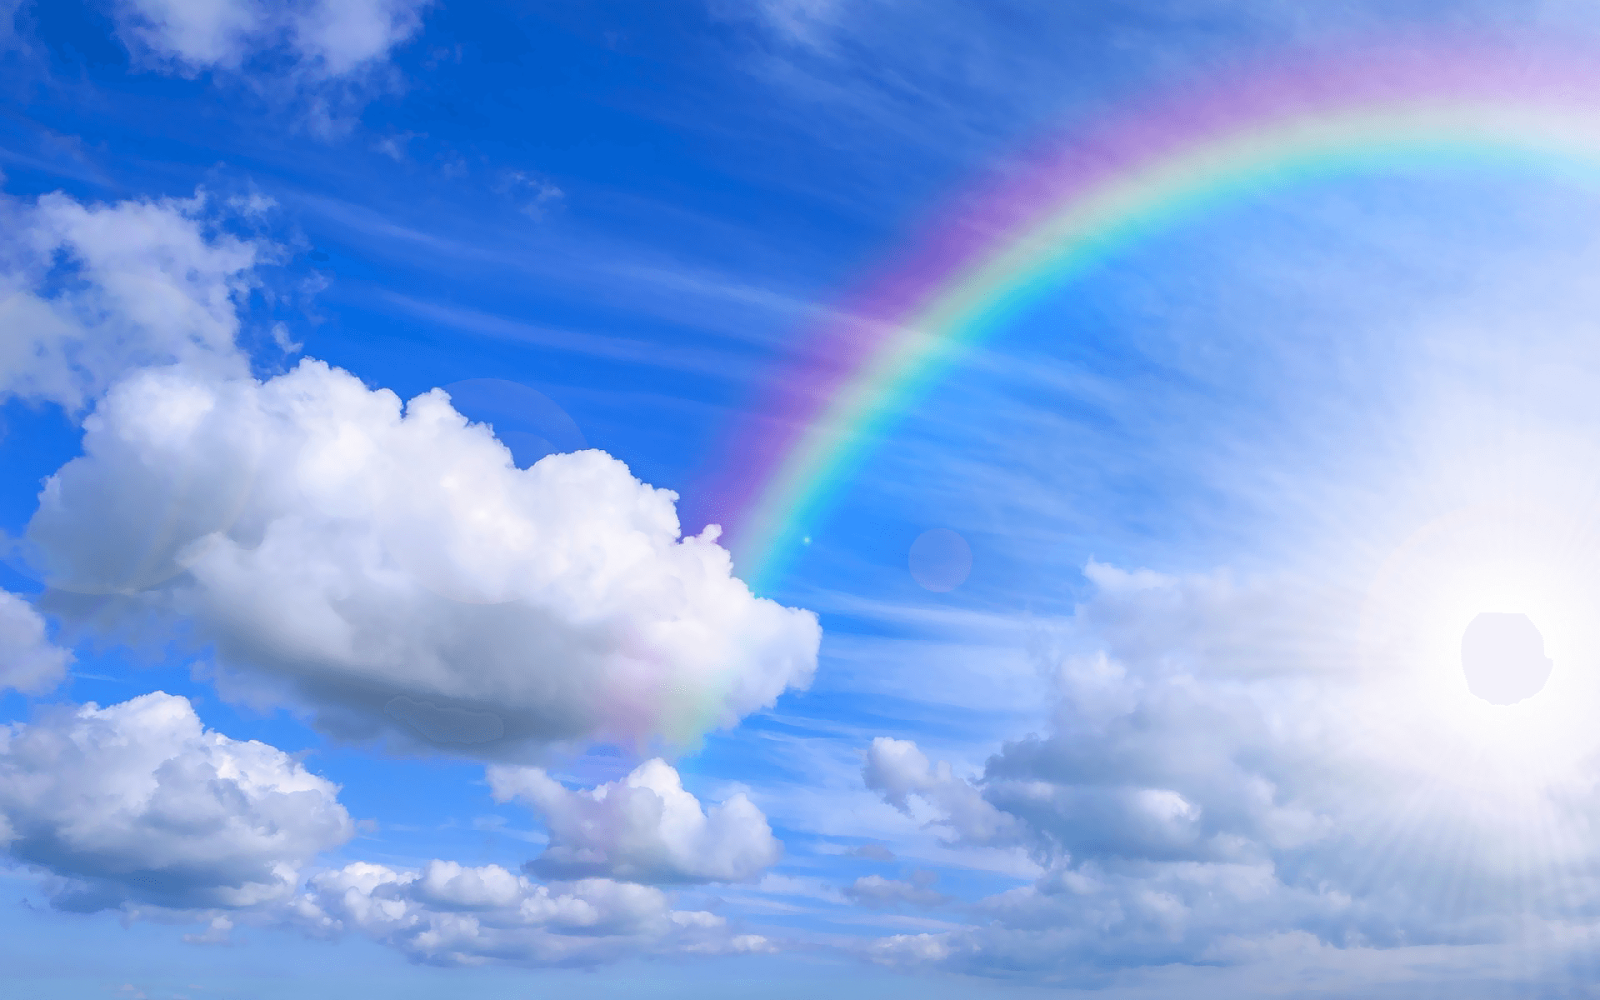 regenbogen wallpaper,sky,rainbow,cloud,daytime,meteorological phenomenon